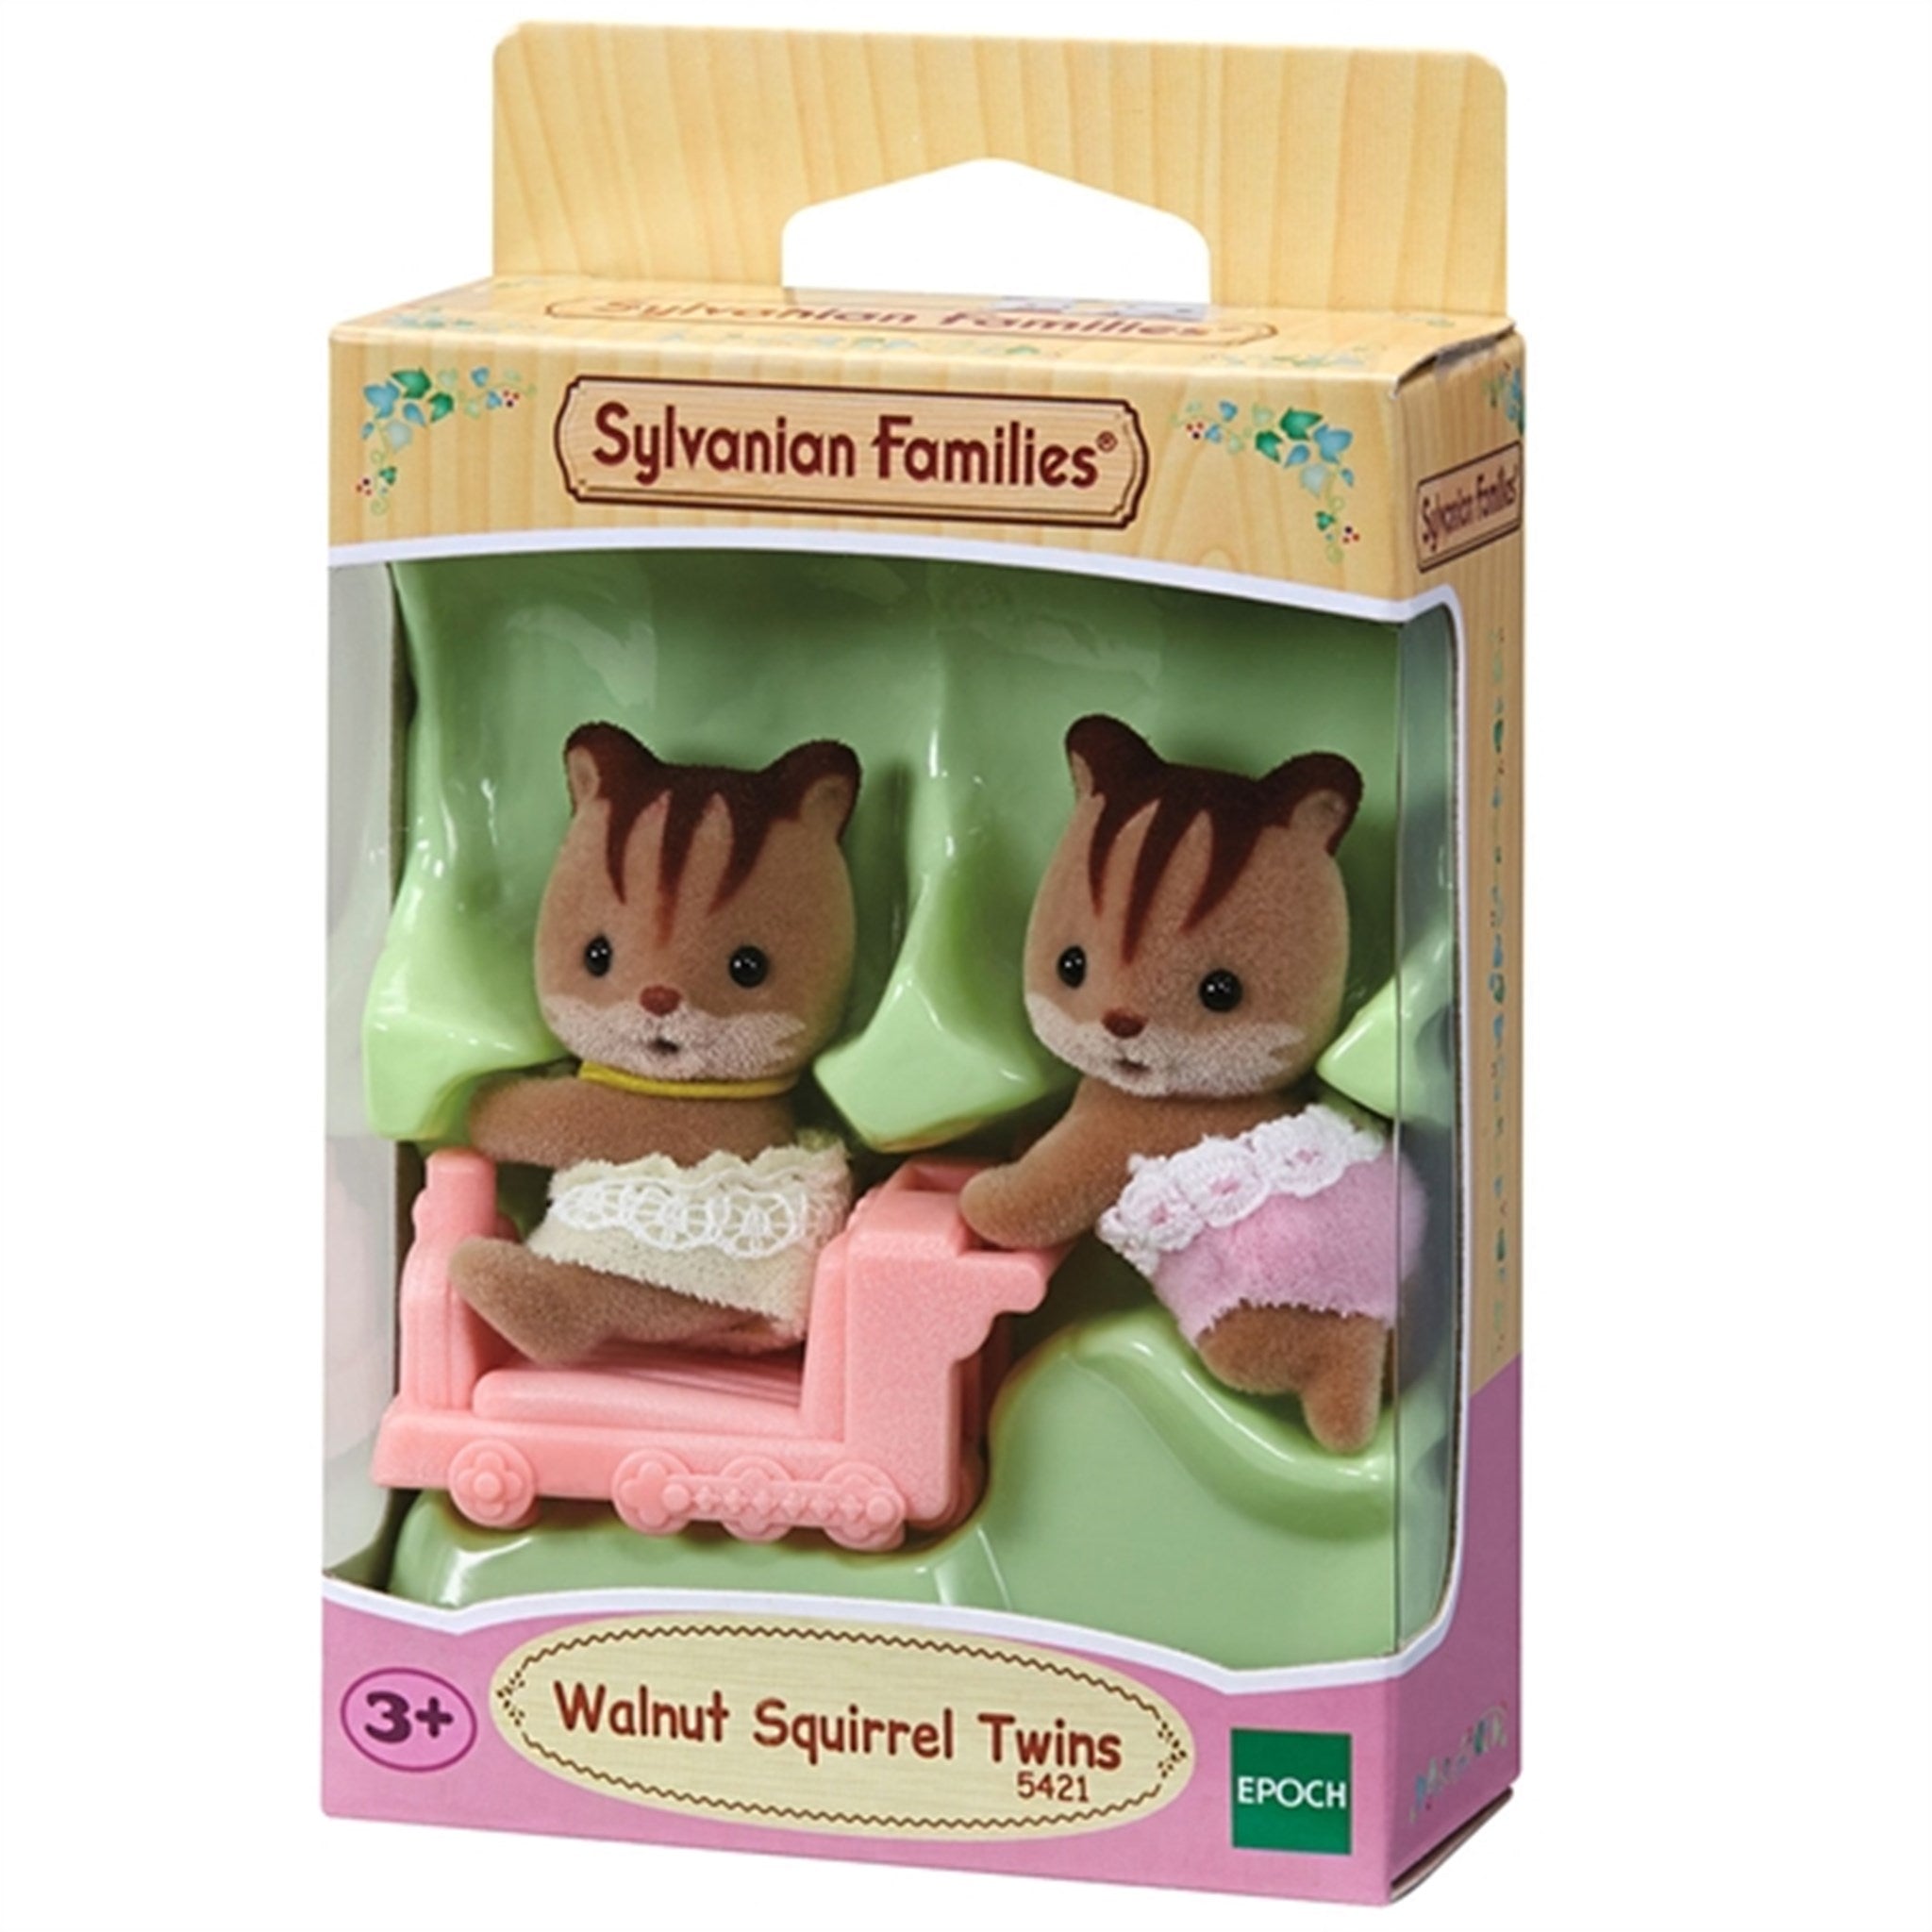 Sylvanian Families® Walnut Squirrel Twins